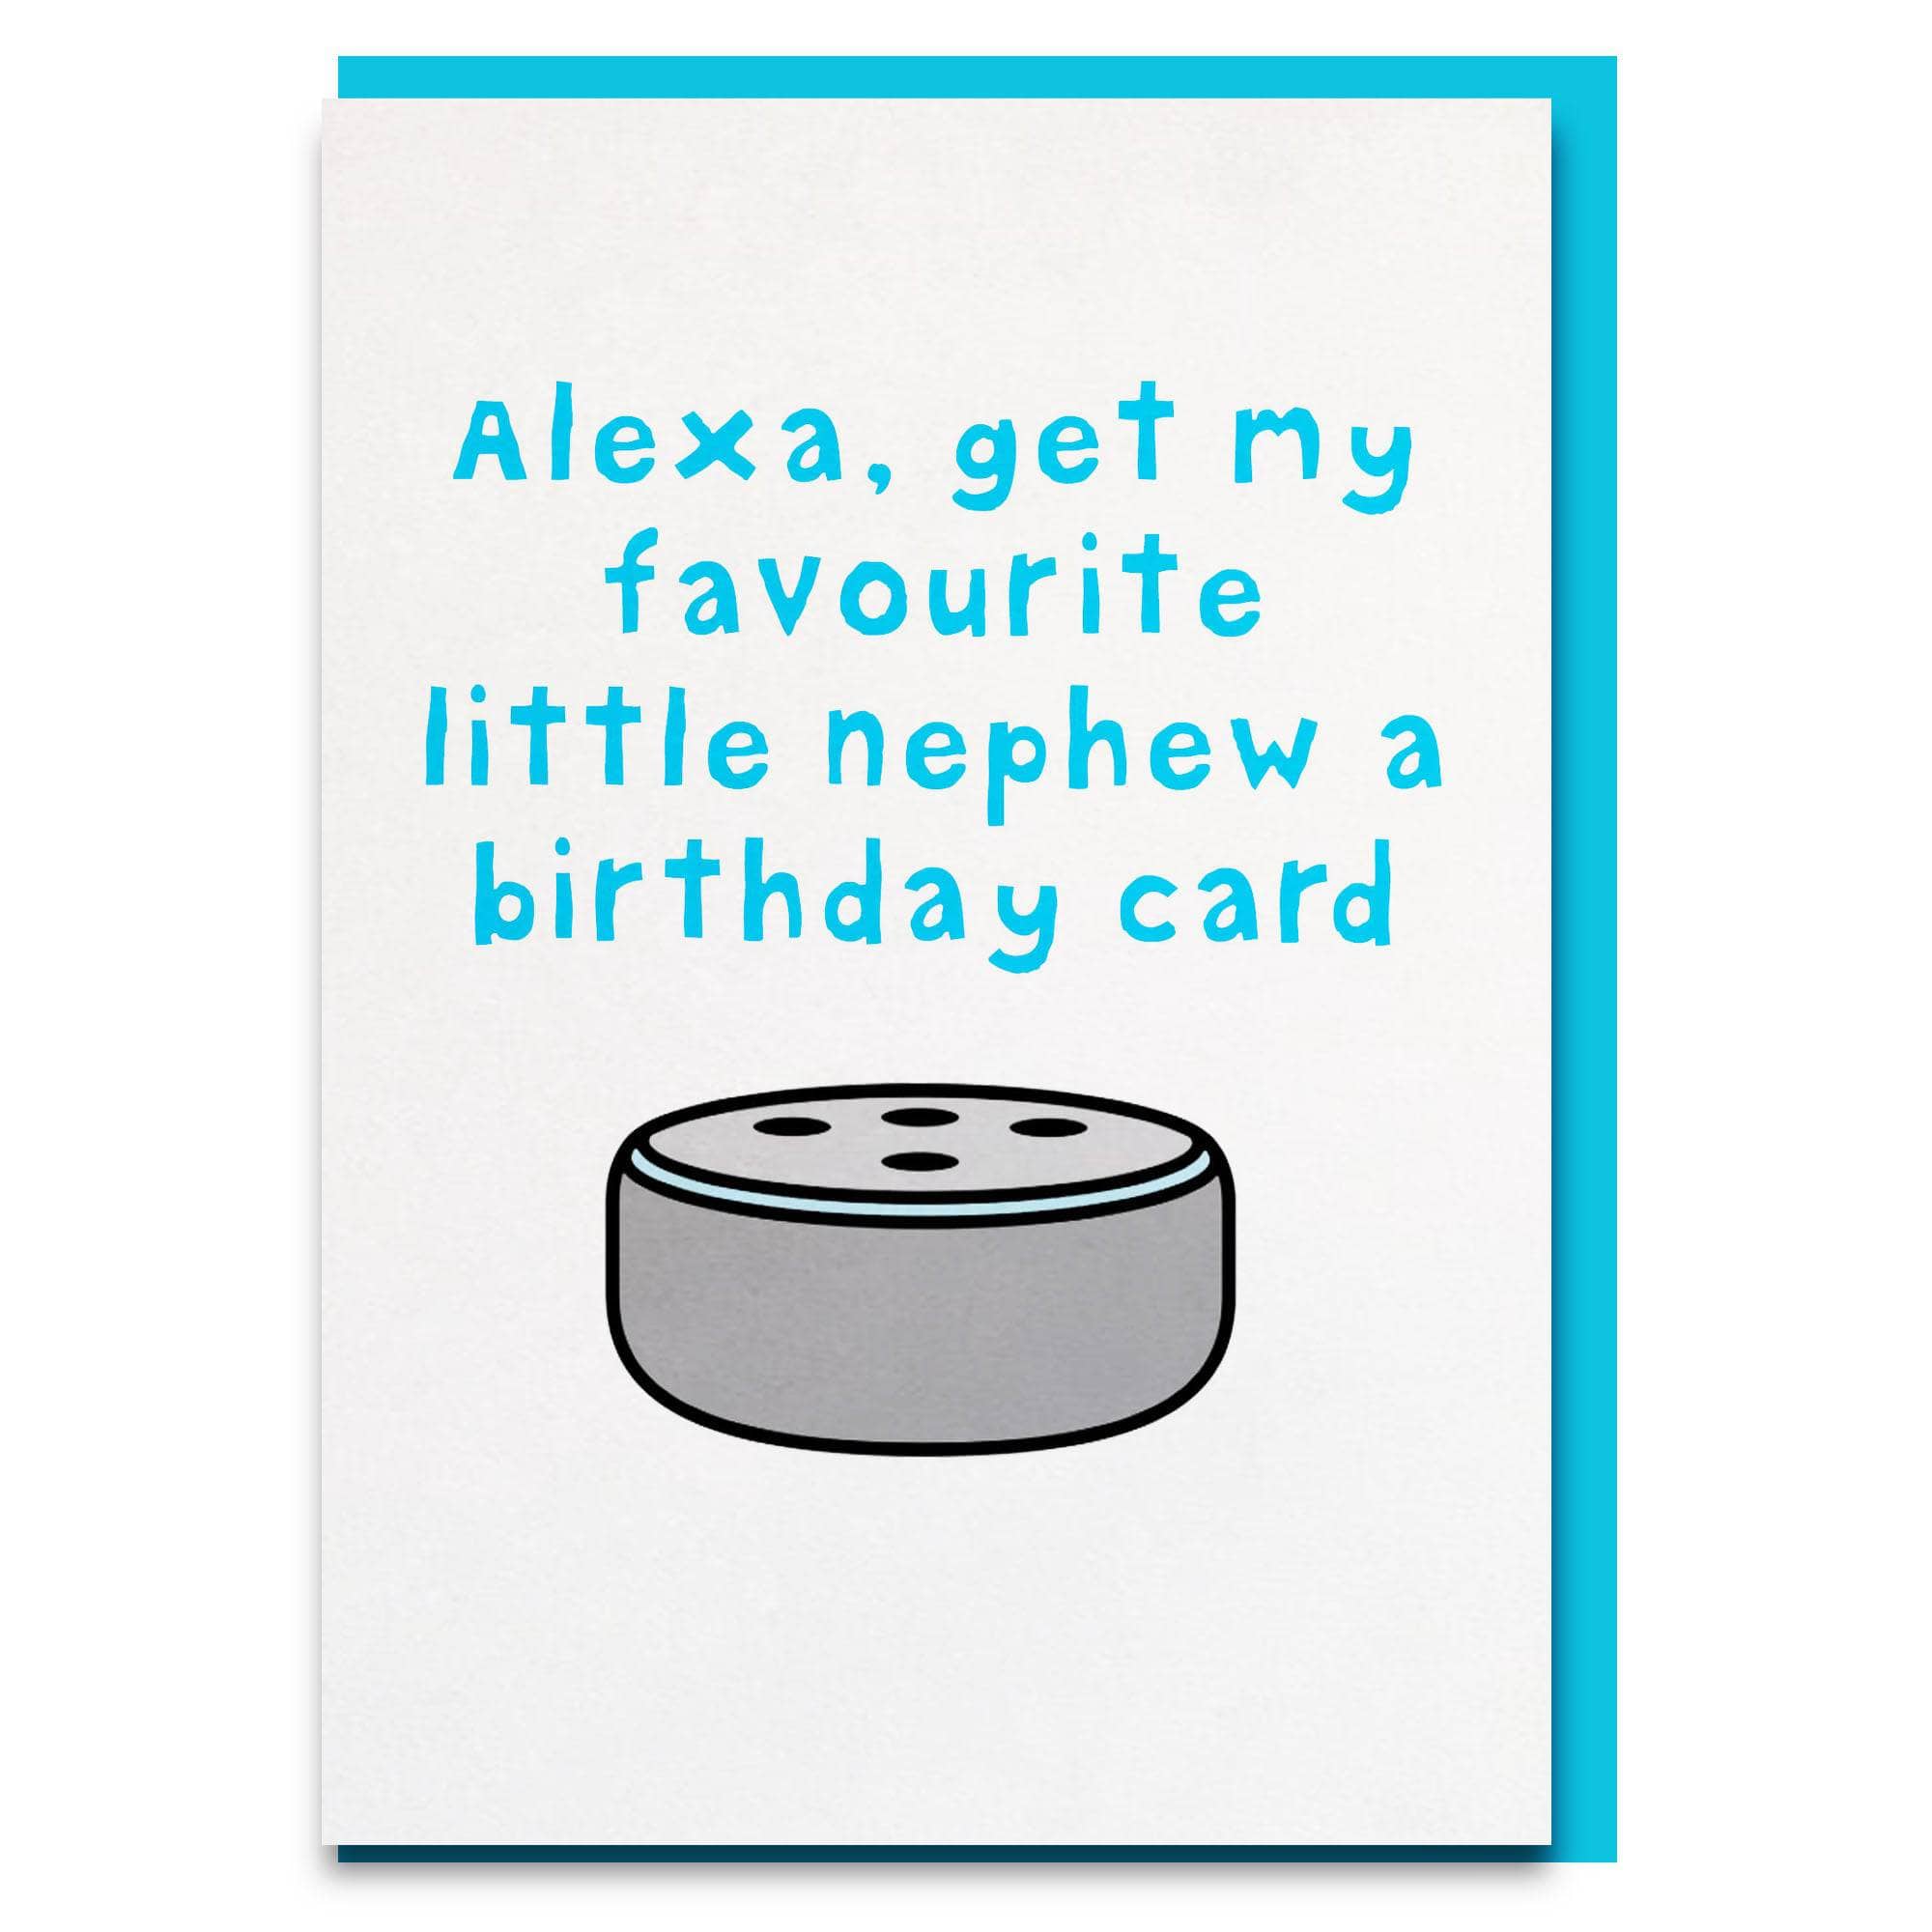 Funny and sweet Alexa nephew birthday card! 